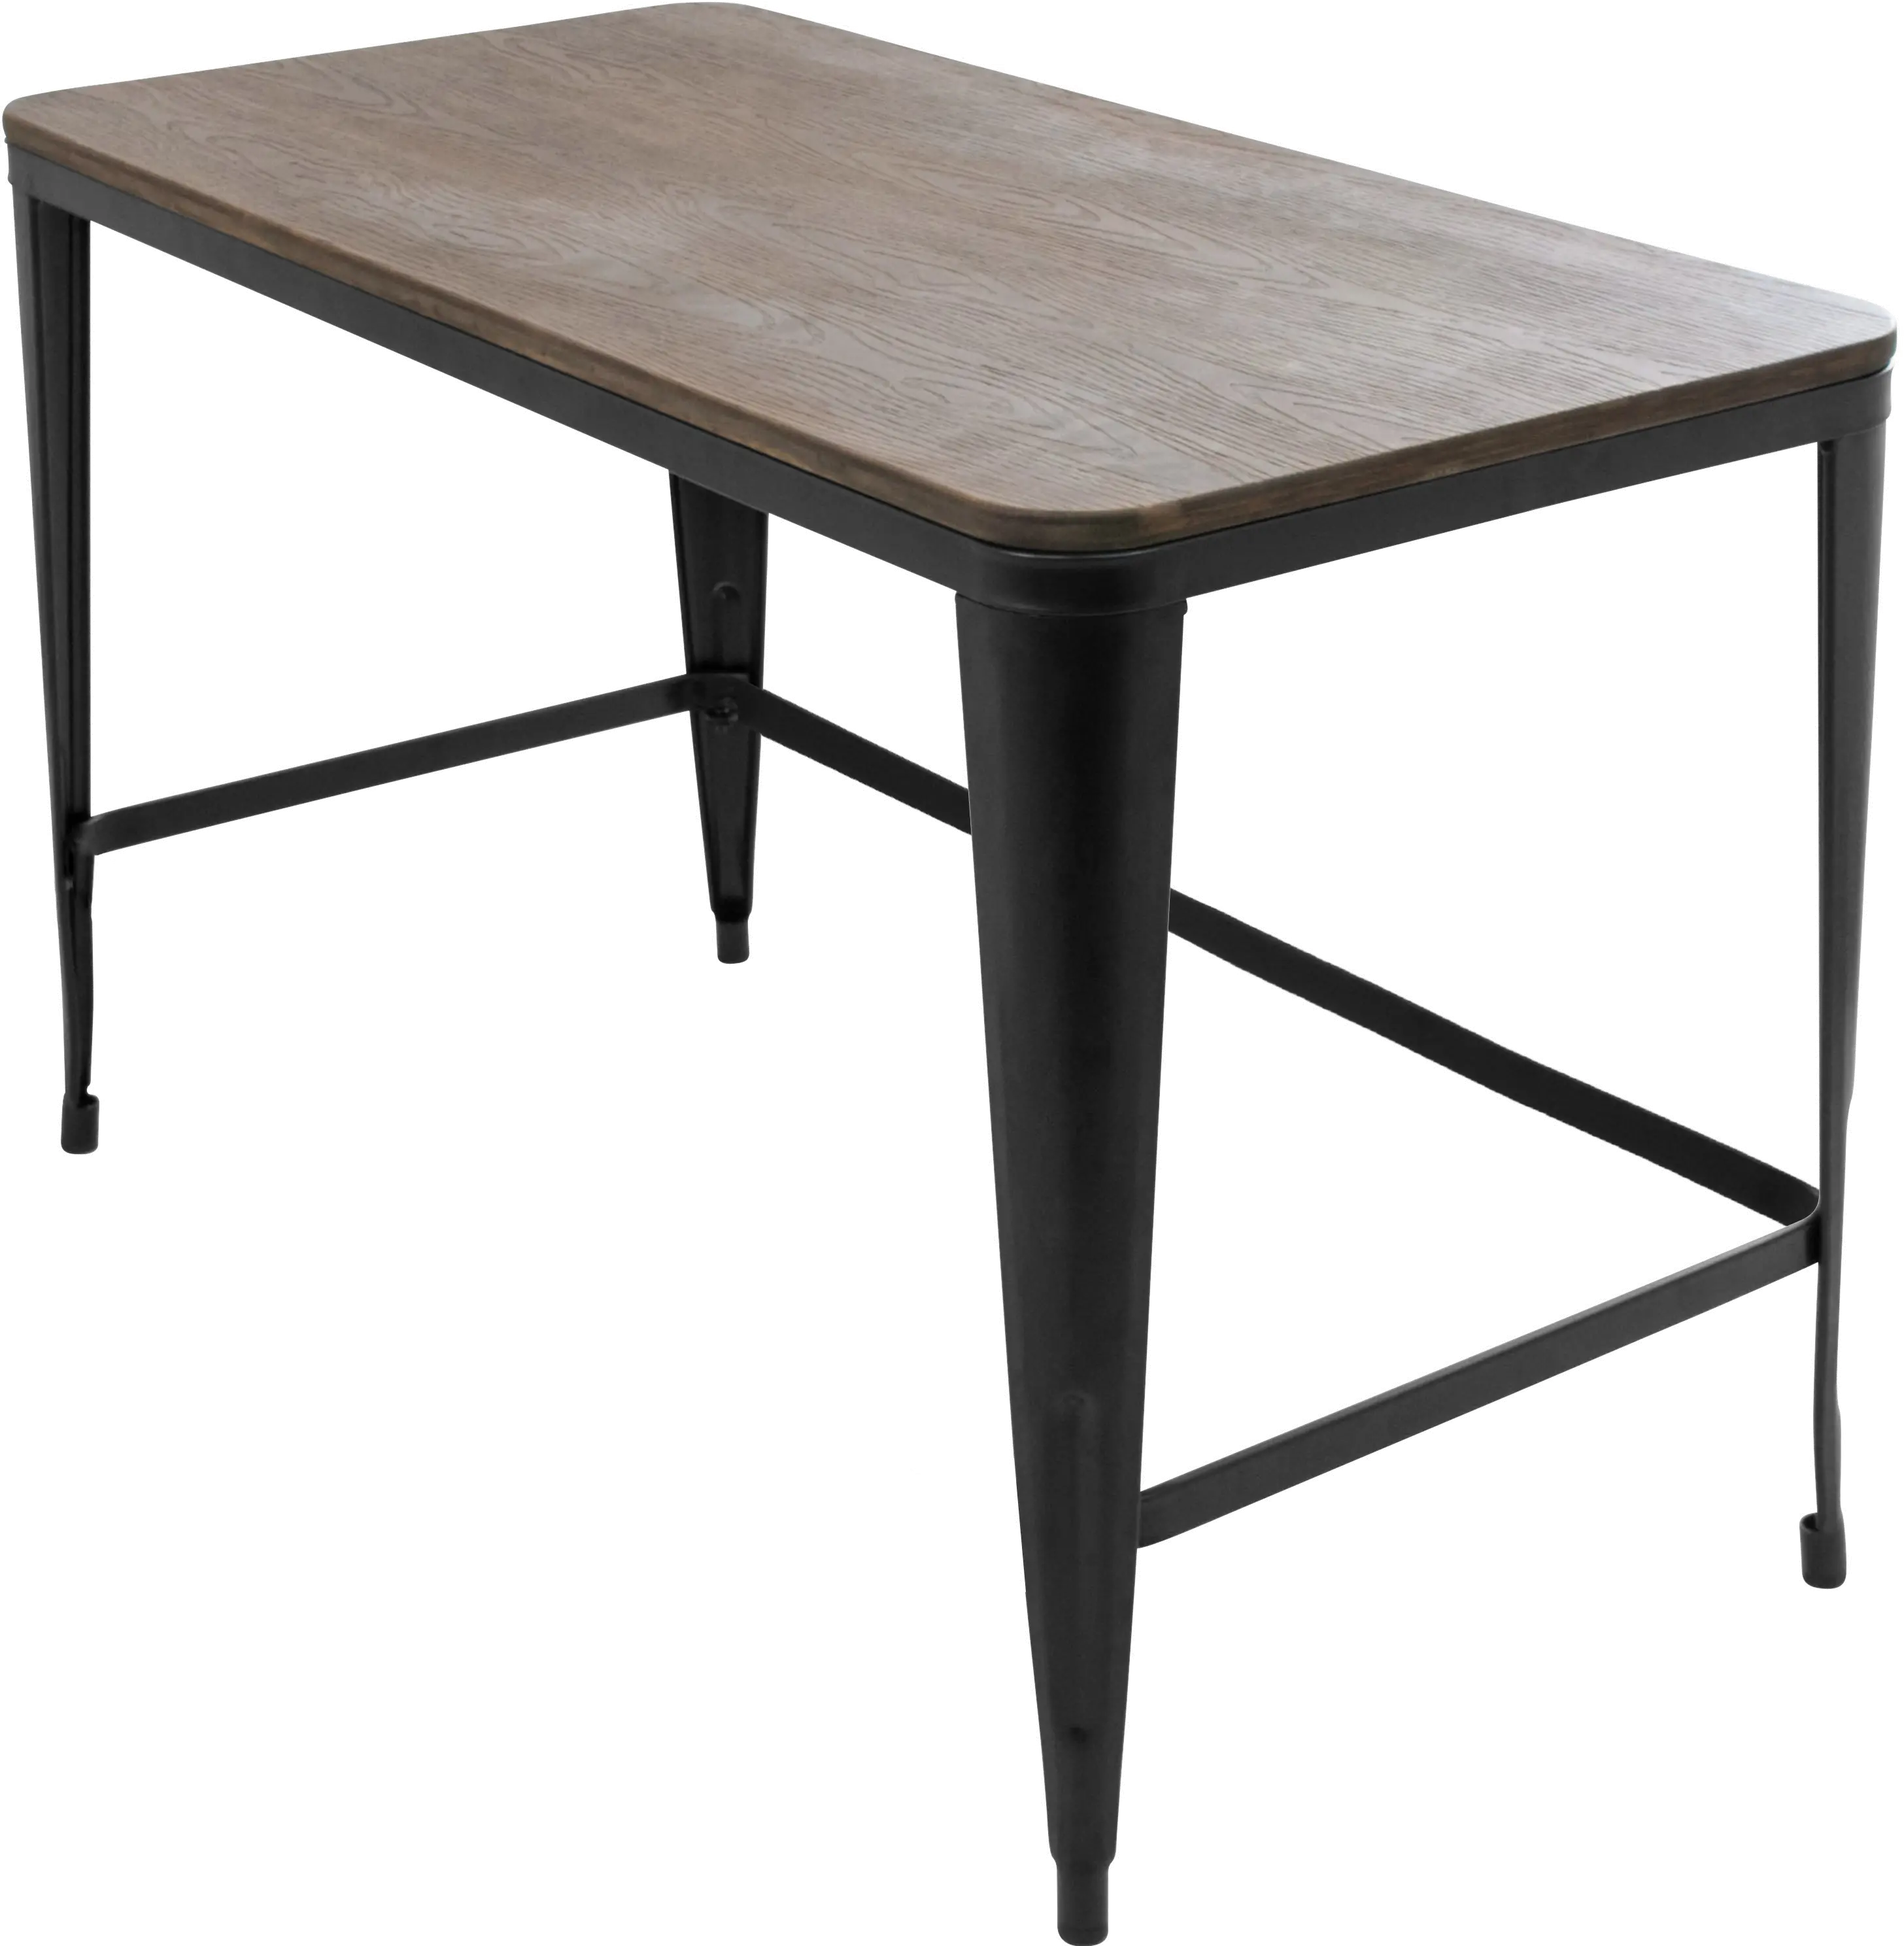 OFD-PIABK+E Industrial Black Metal Desk with Wood Top - Pia sku OFD-PIABK+E